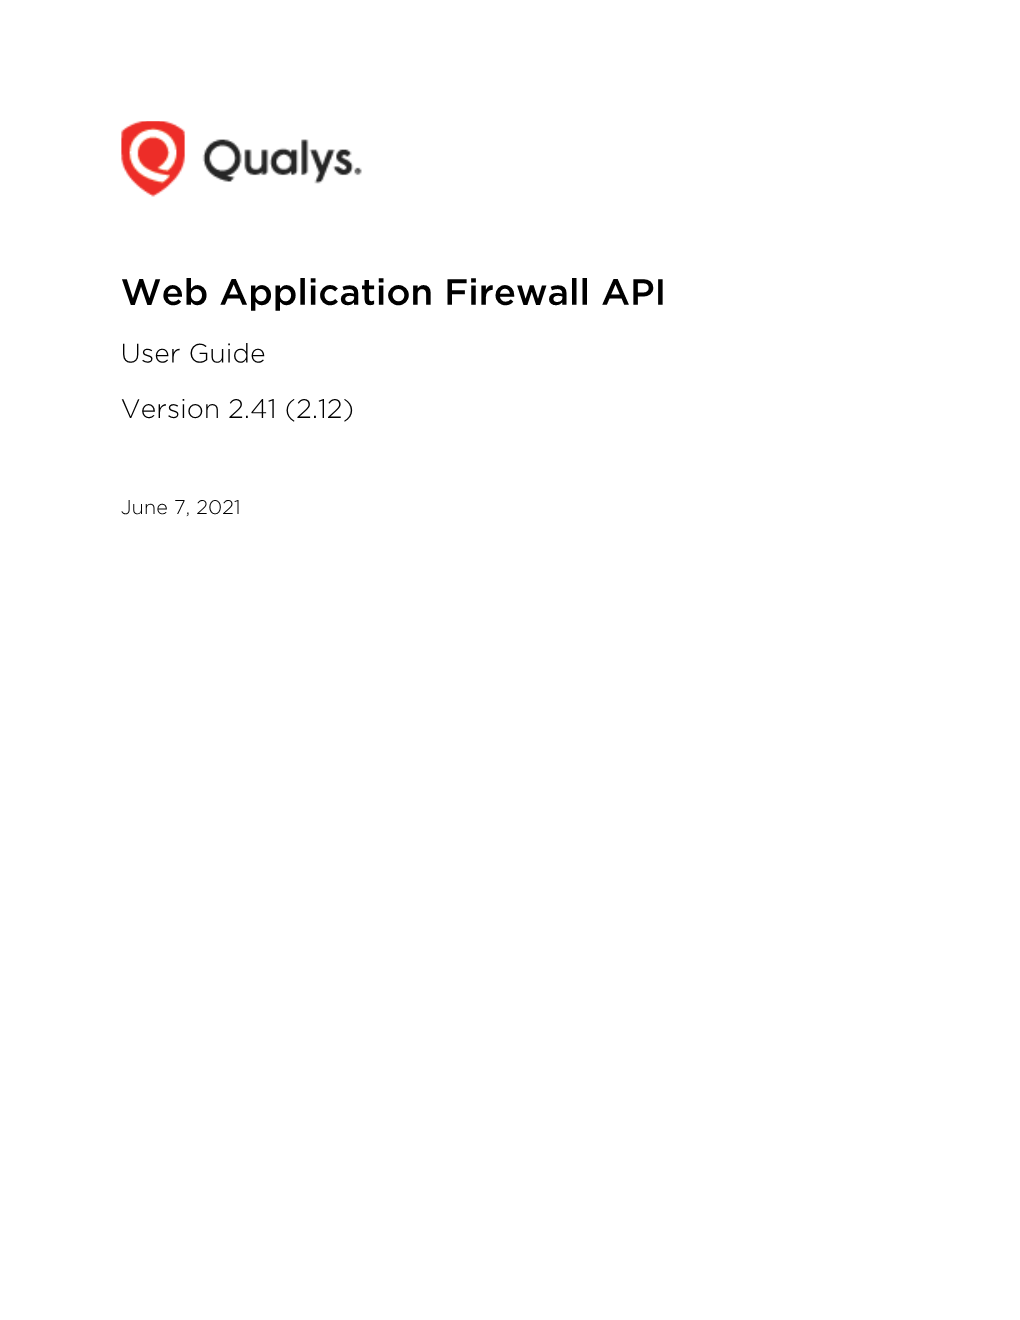 Web Application Firewall API User Guide